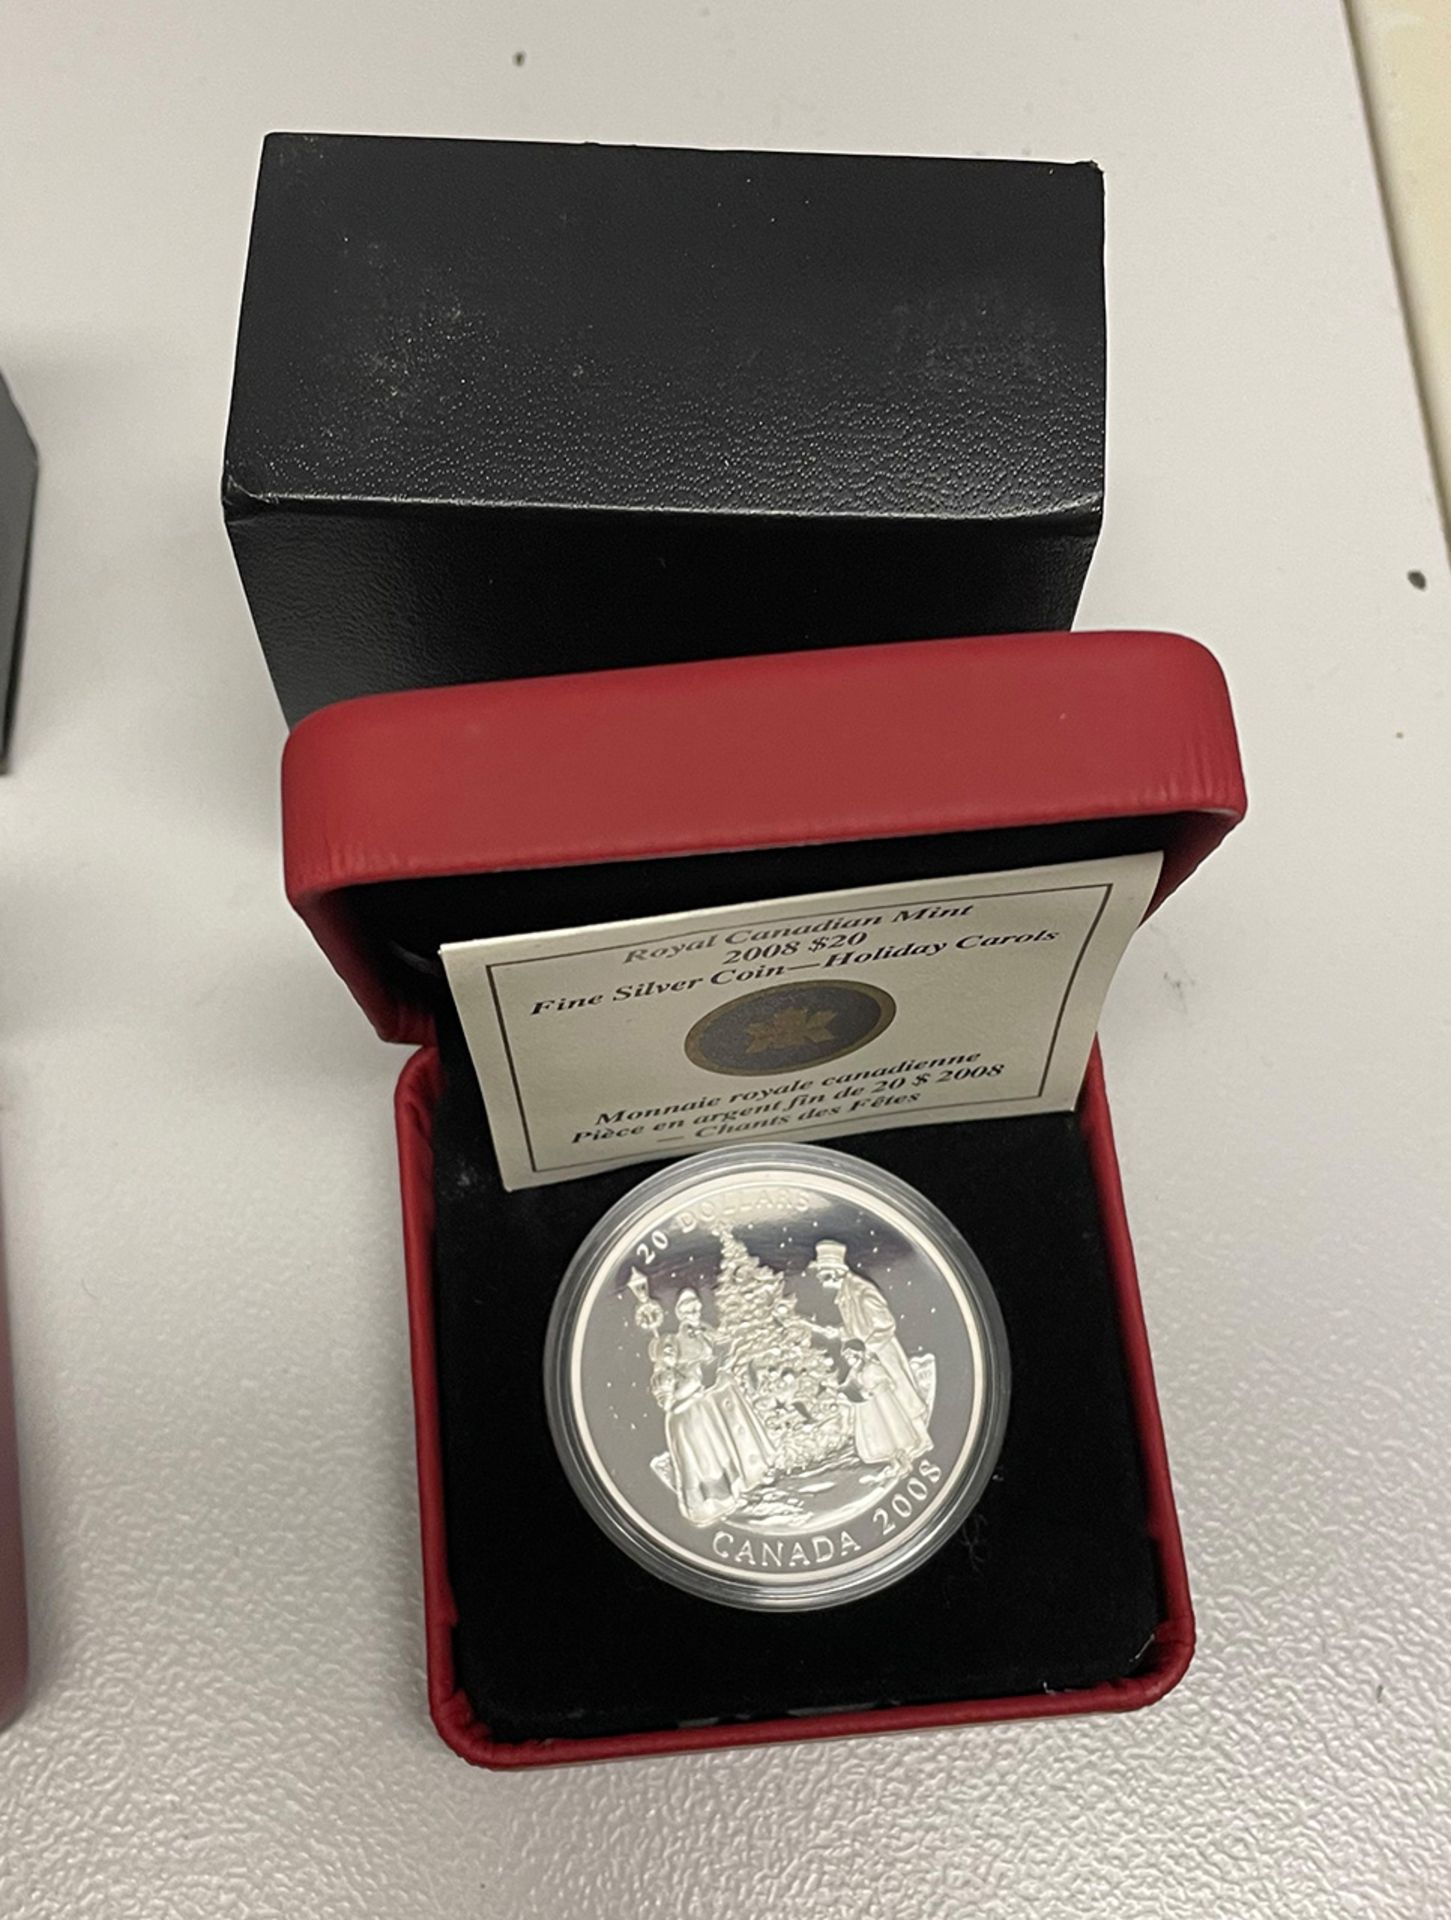 Silber Münzen Konvolut, Canada, Silber Dollars: 1 x 50 Dollar 2010 5-0unce Silver Coin, 99,99 % pure - Image 5 of 6